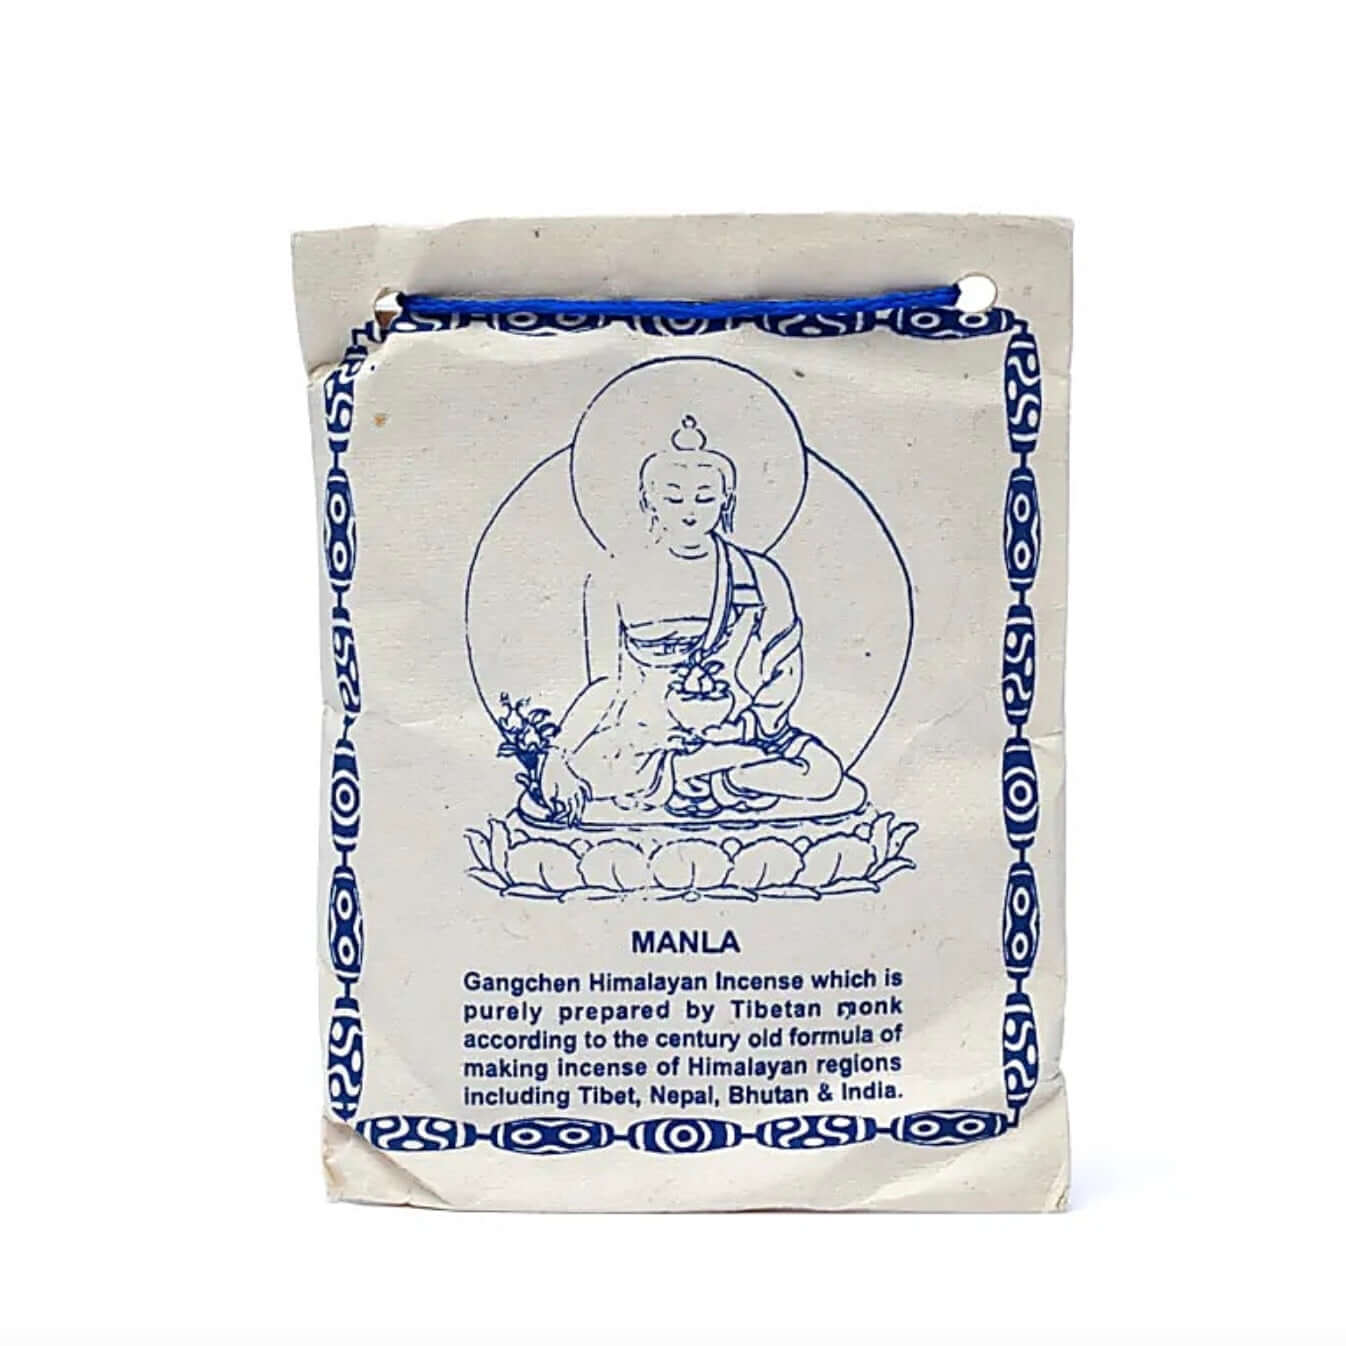 Tibetan incense powder Medicine Buddha - Authentic Gangchen incense from the Himalayas